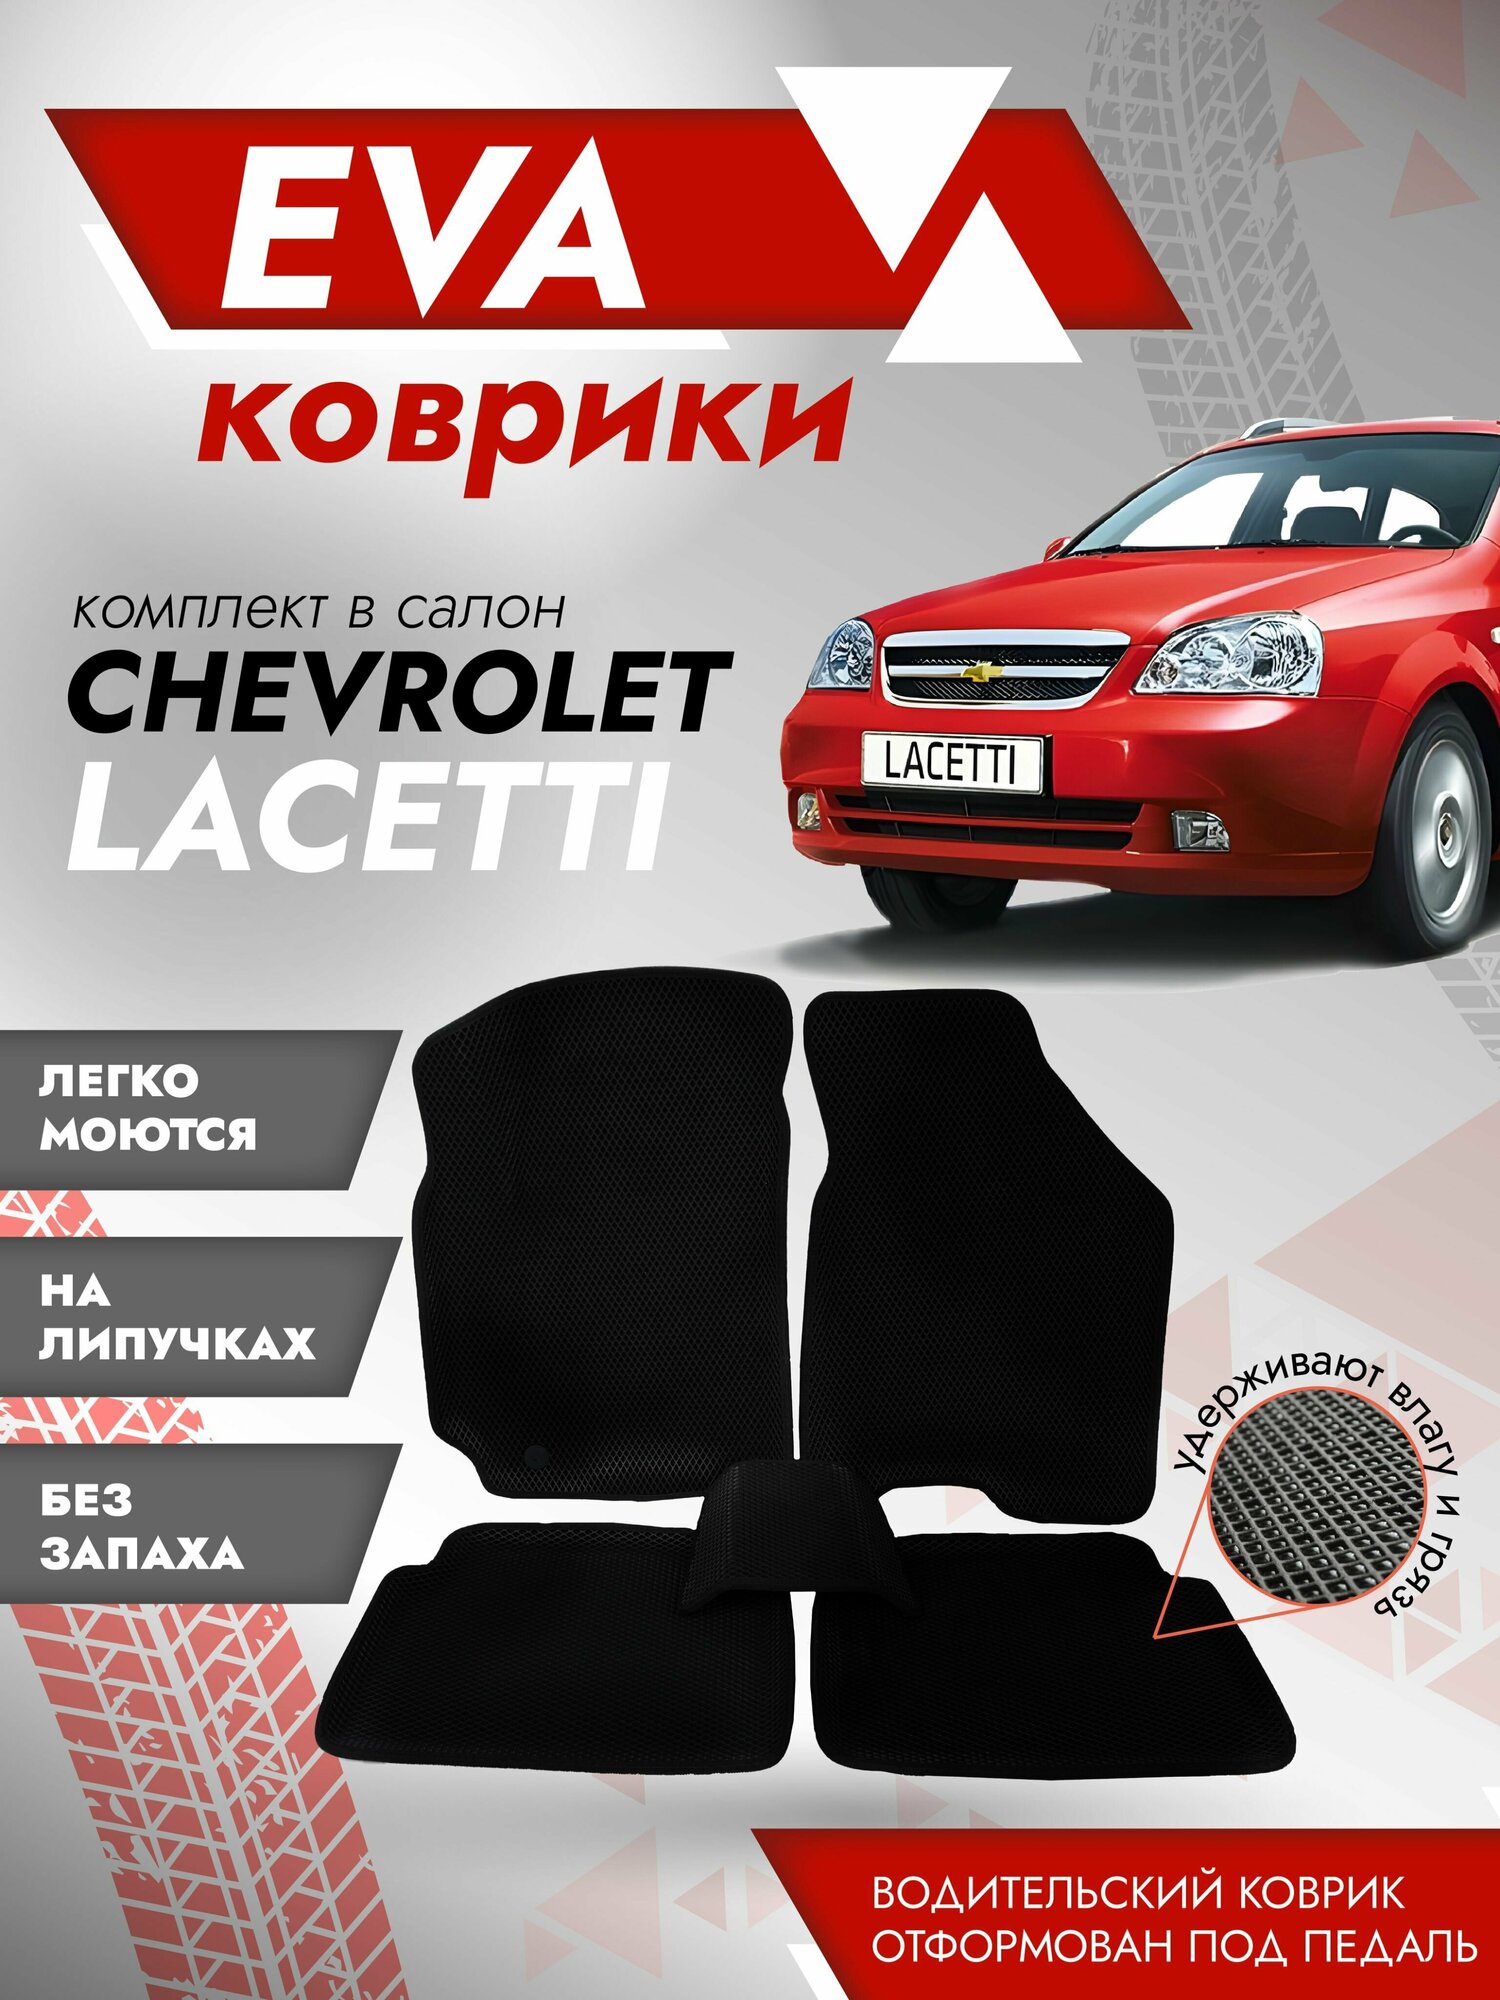 Ева ковры Chevrolet Lacetti 3Д (Ева Коврики Шевроле Лачетти 3D) черный кант